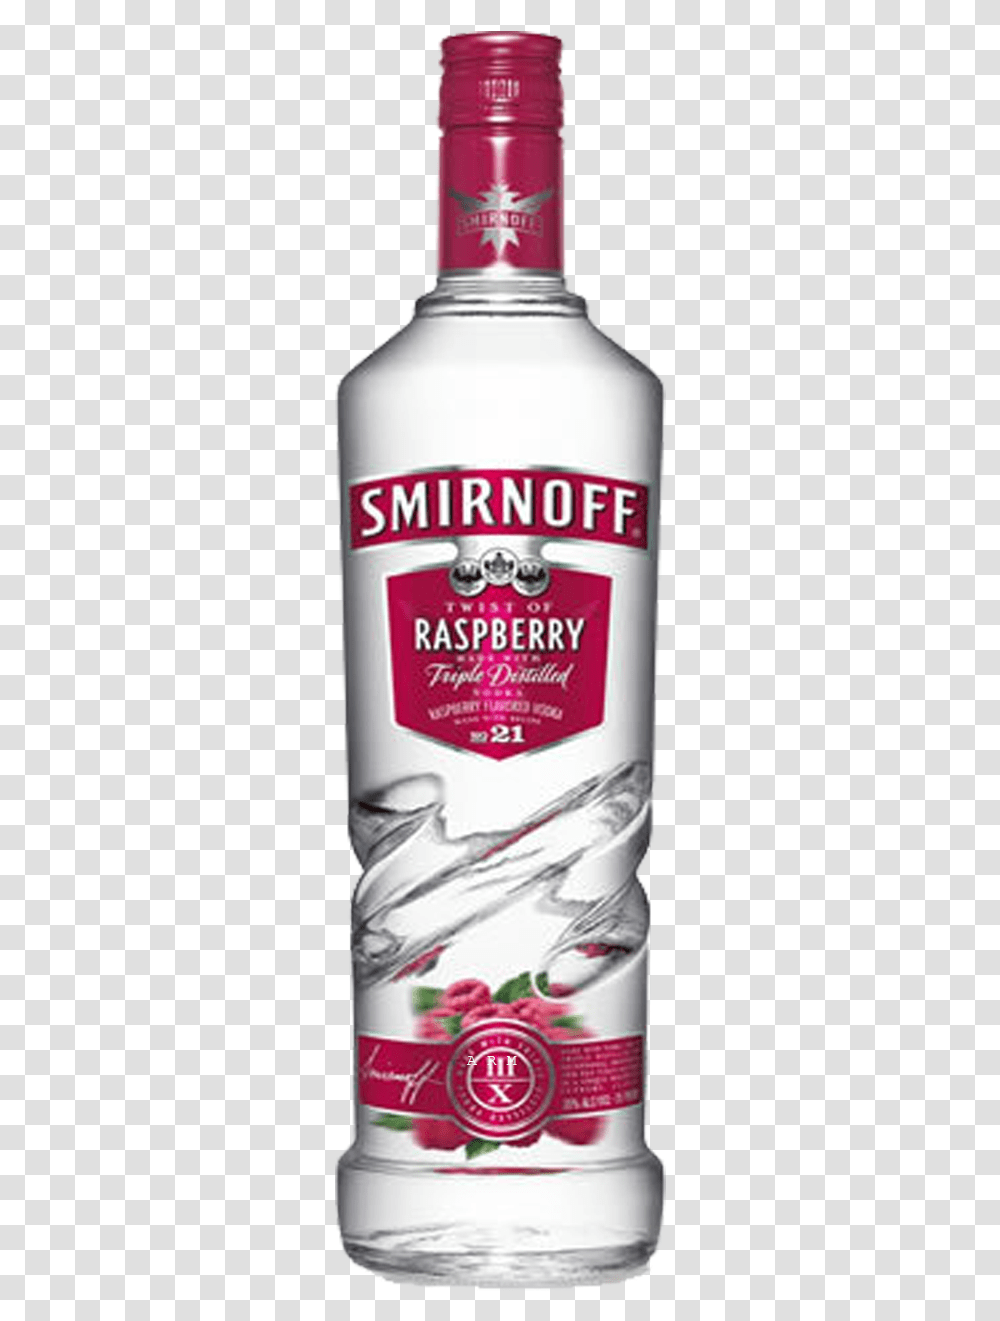 Smirnoff Twisted Raspberry, Liquor, Alcohol, Beverage, Absinthe ...